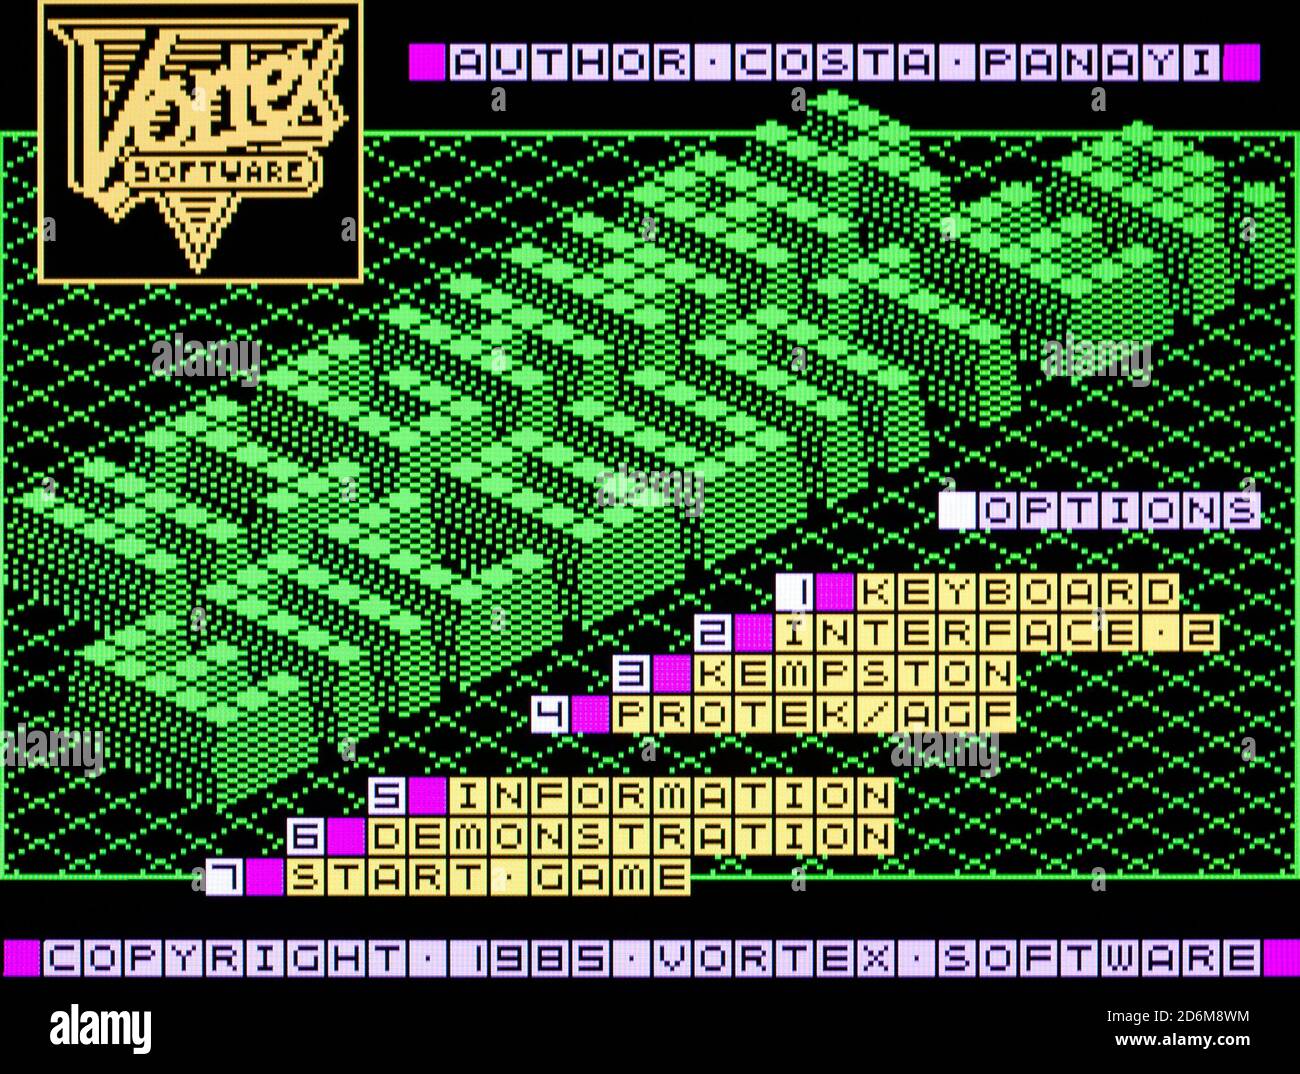 Unleashing Nostalgia: Exploring the Thrills of “Highway Encounter” on ZX Spectrum